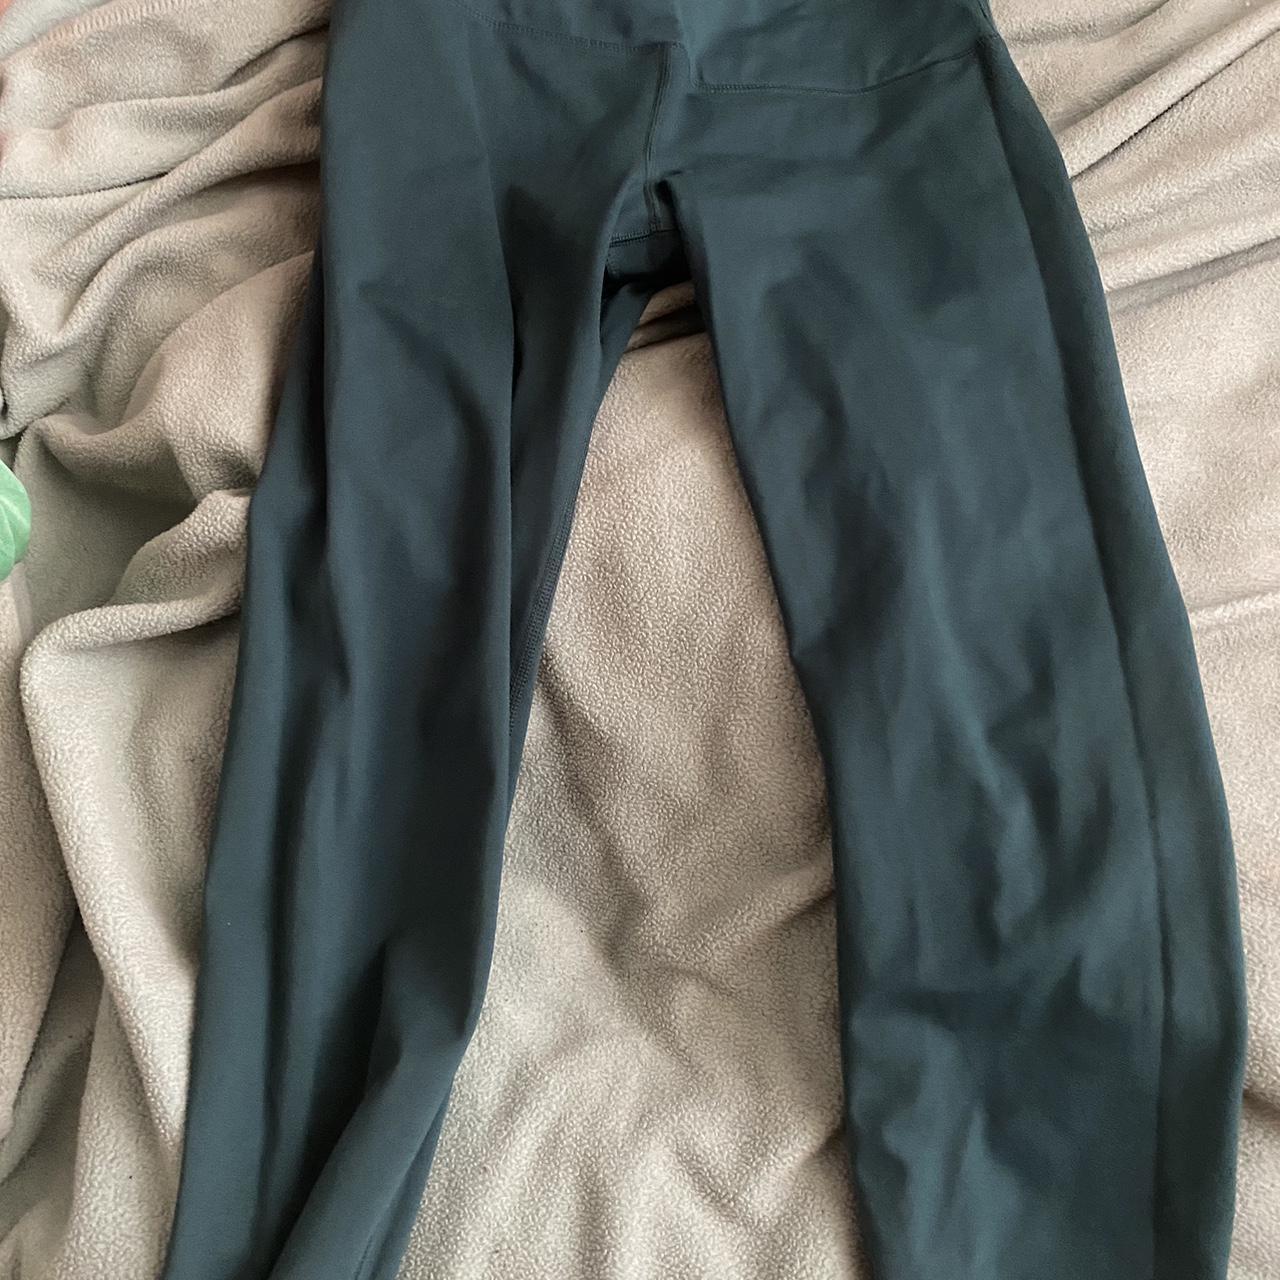 Yogalicious capri length green leggings. - Depop